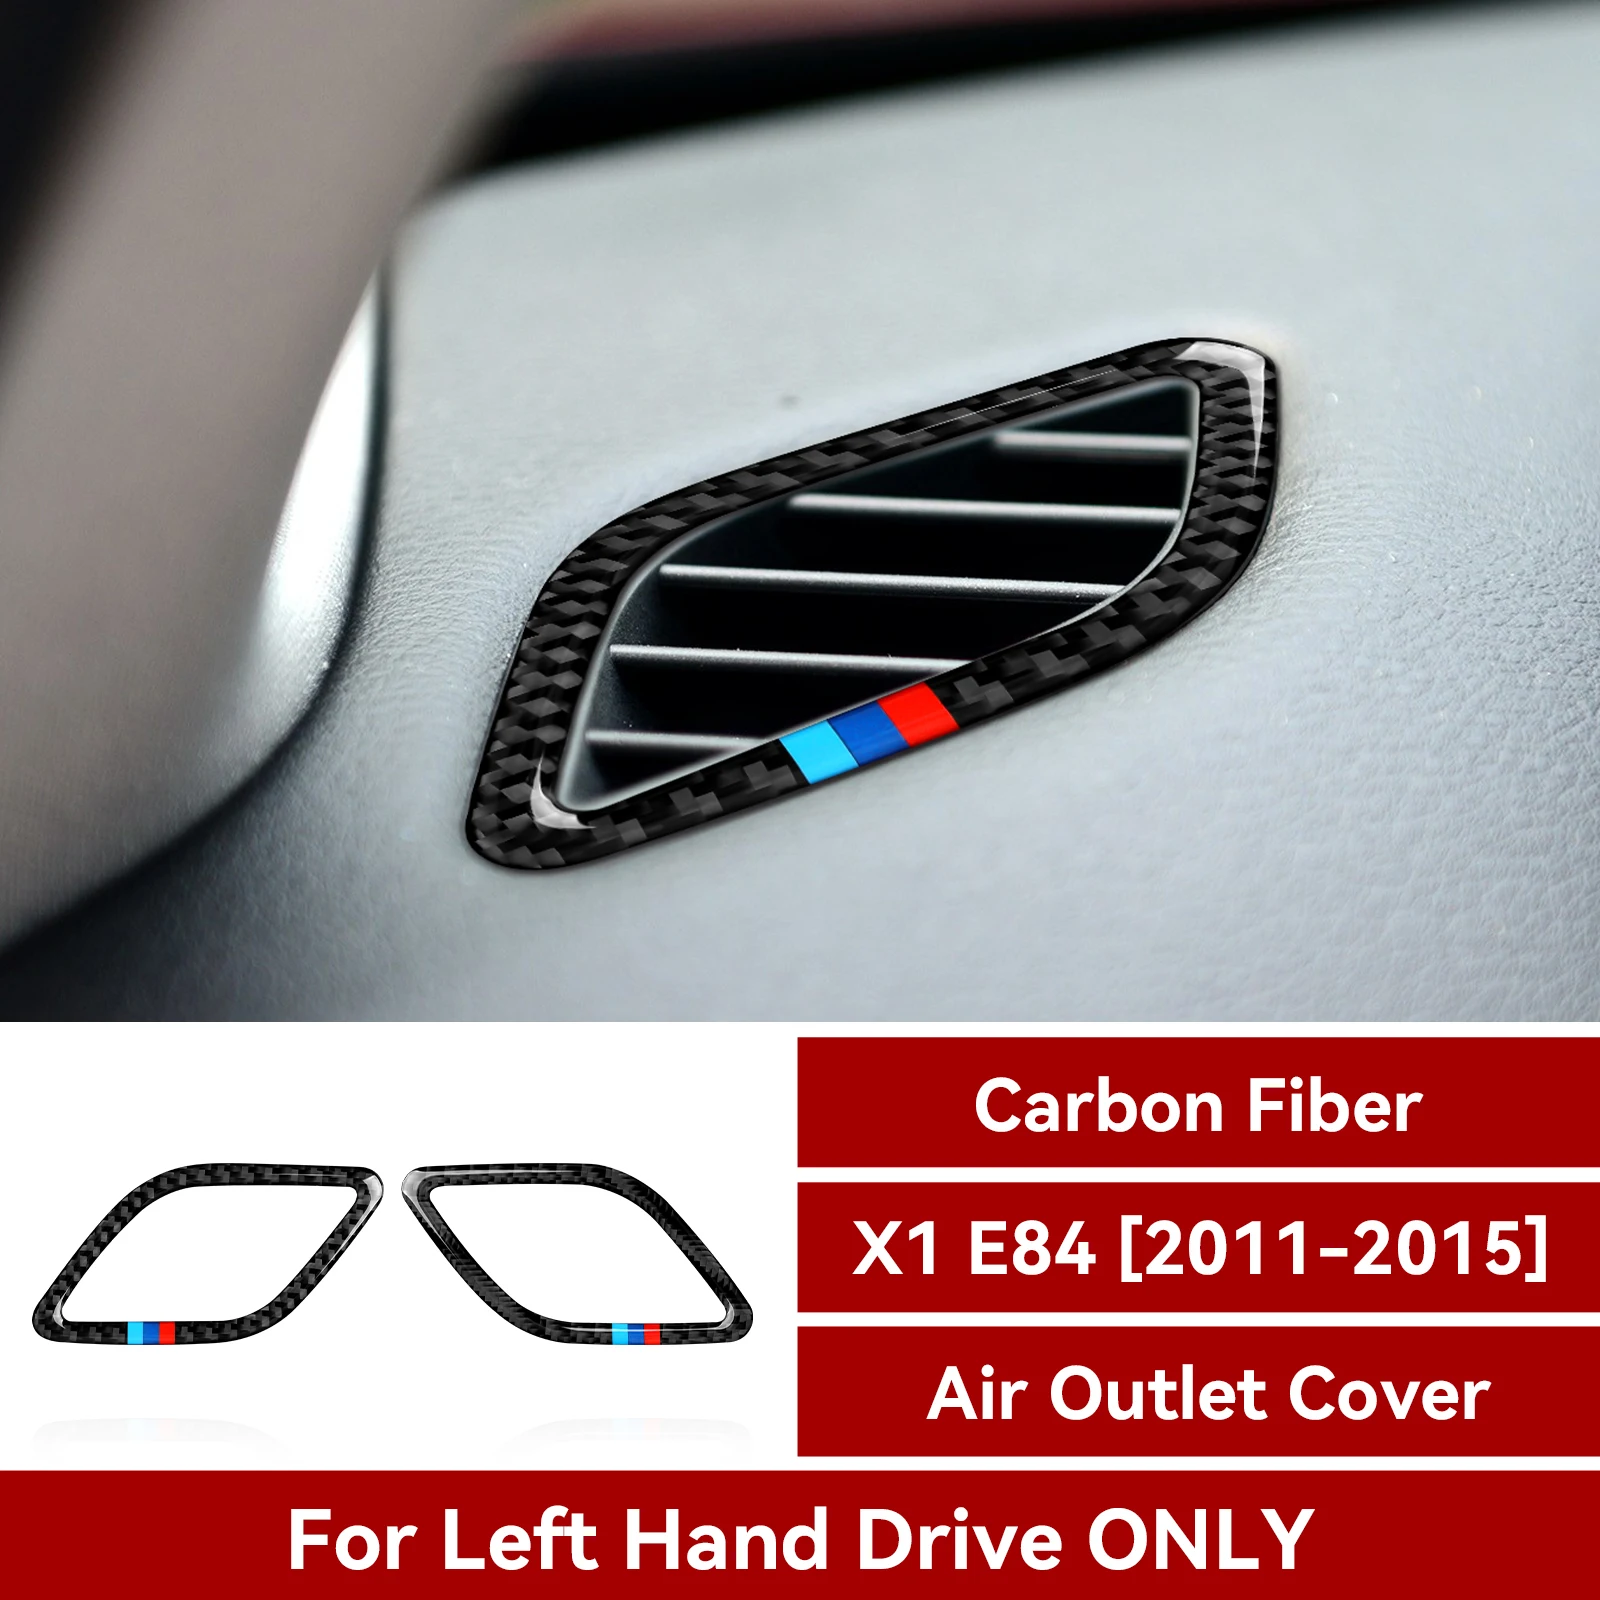 

Car Carbon Fiber Protector Patch For BMW X1 E84 2011-2015 Dedicated Parts Auto Interior Decorative Stickers Trim Accessories